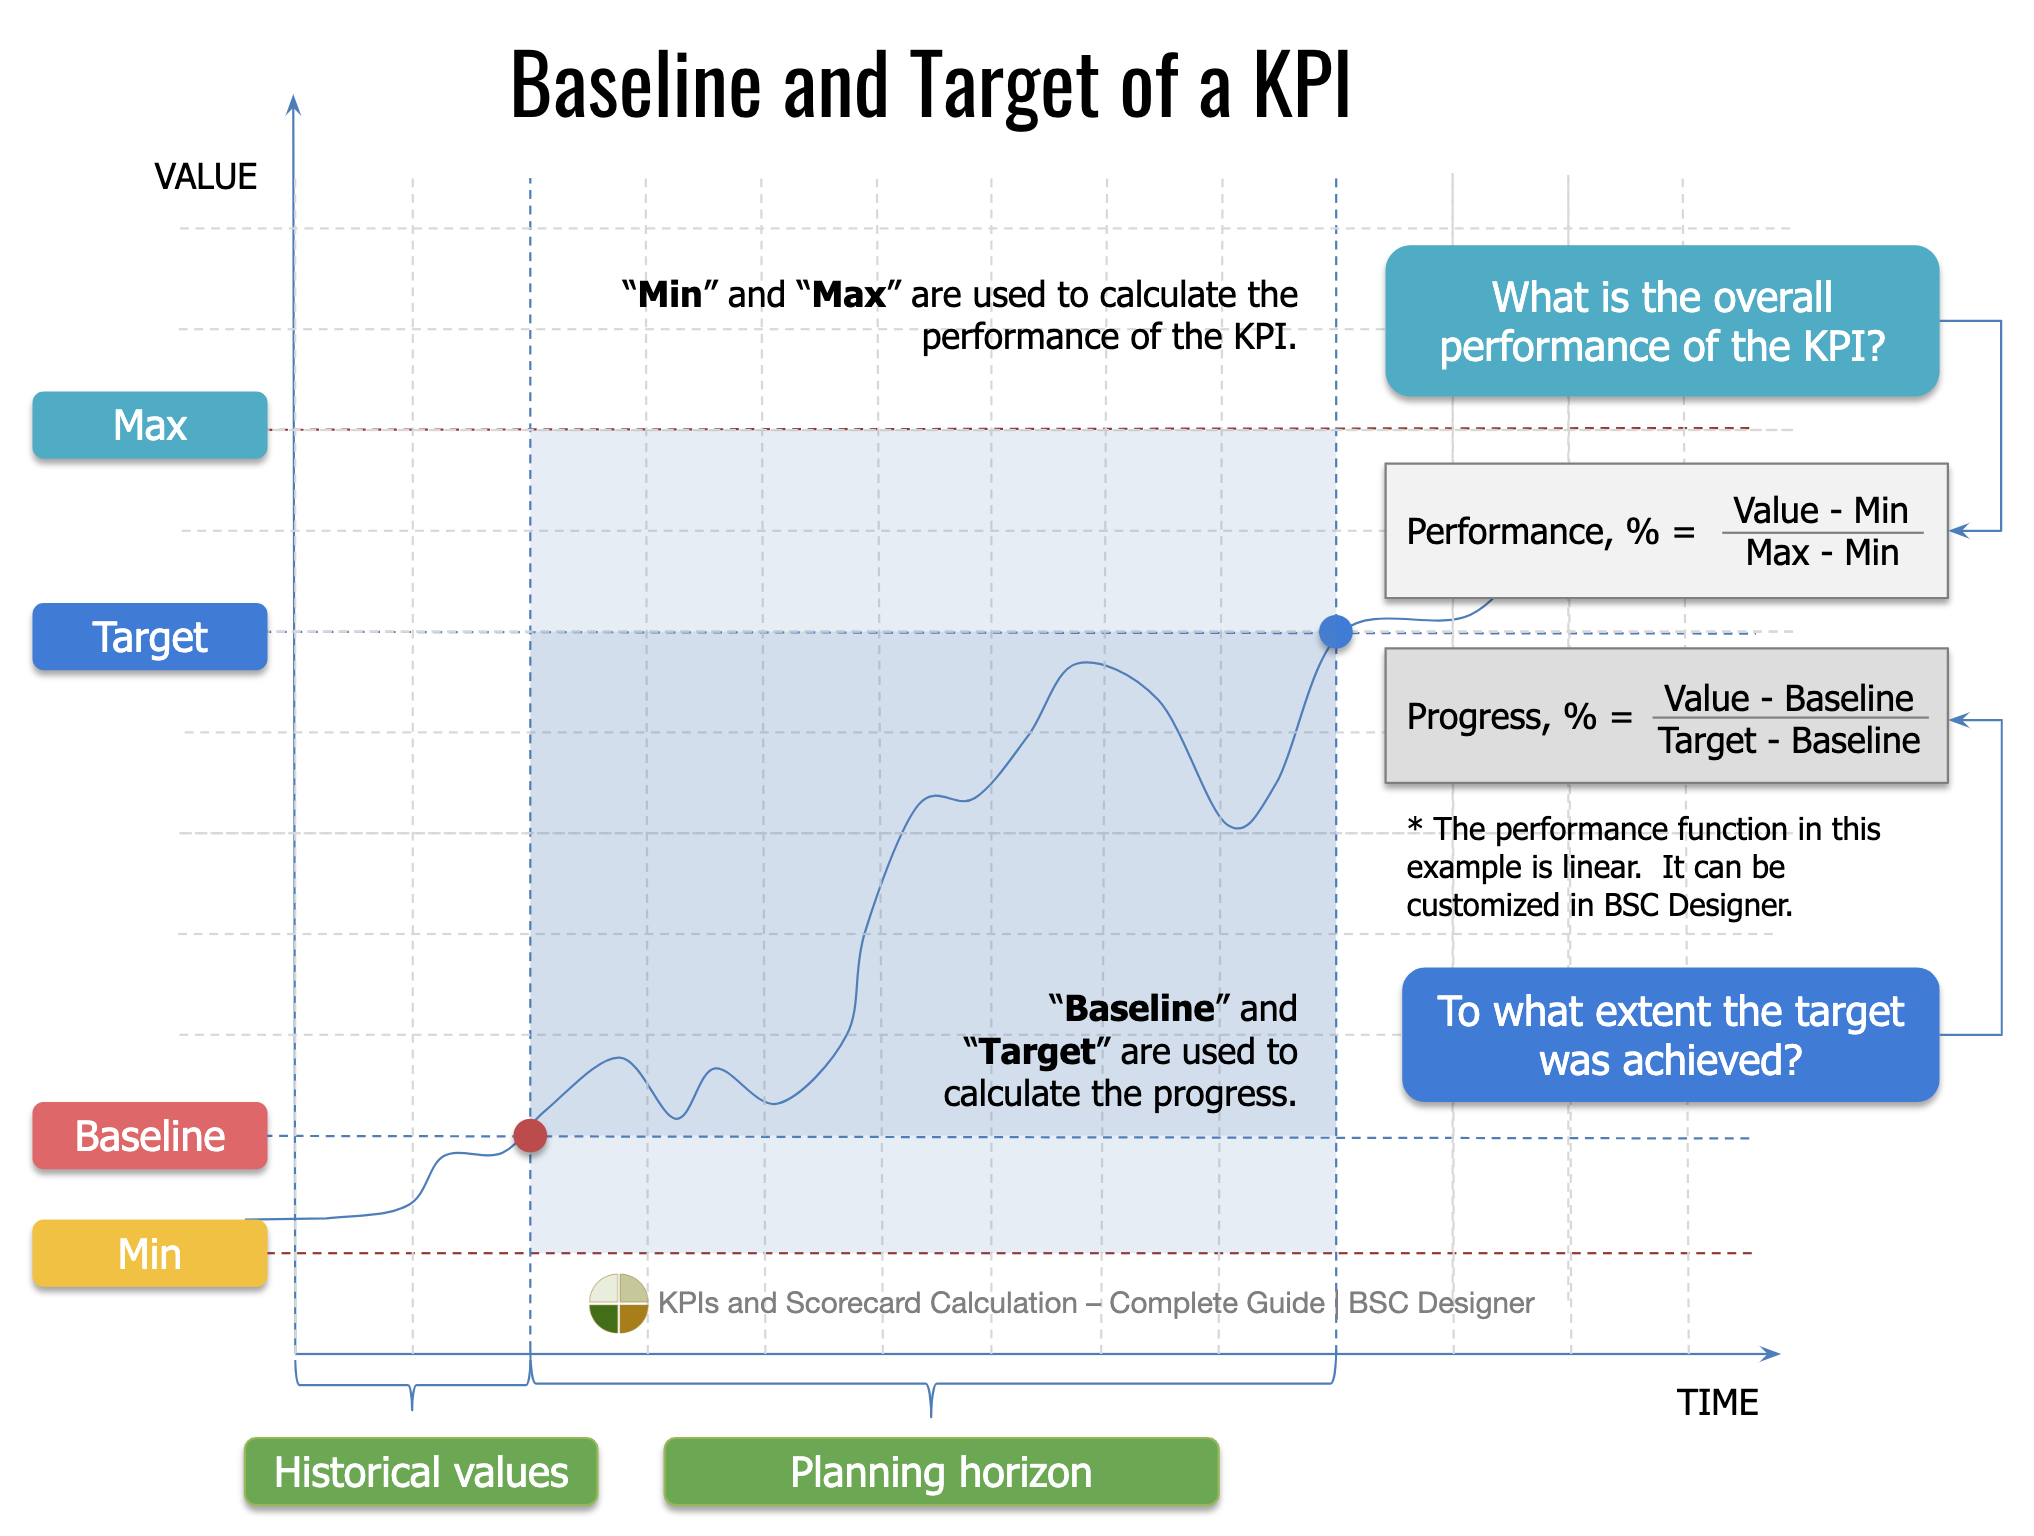 Baseline and target of a KPI